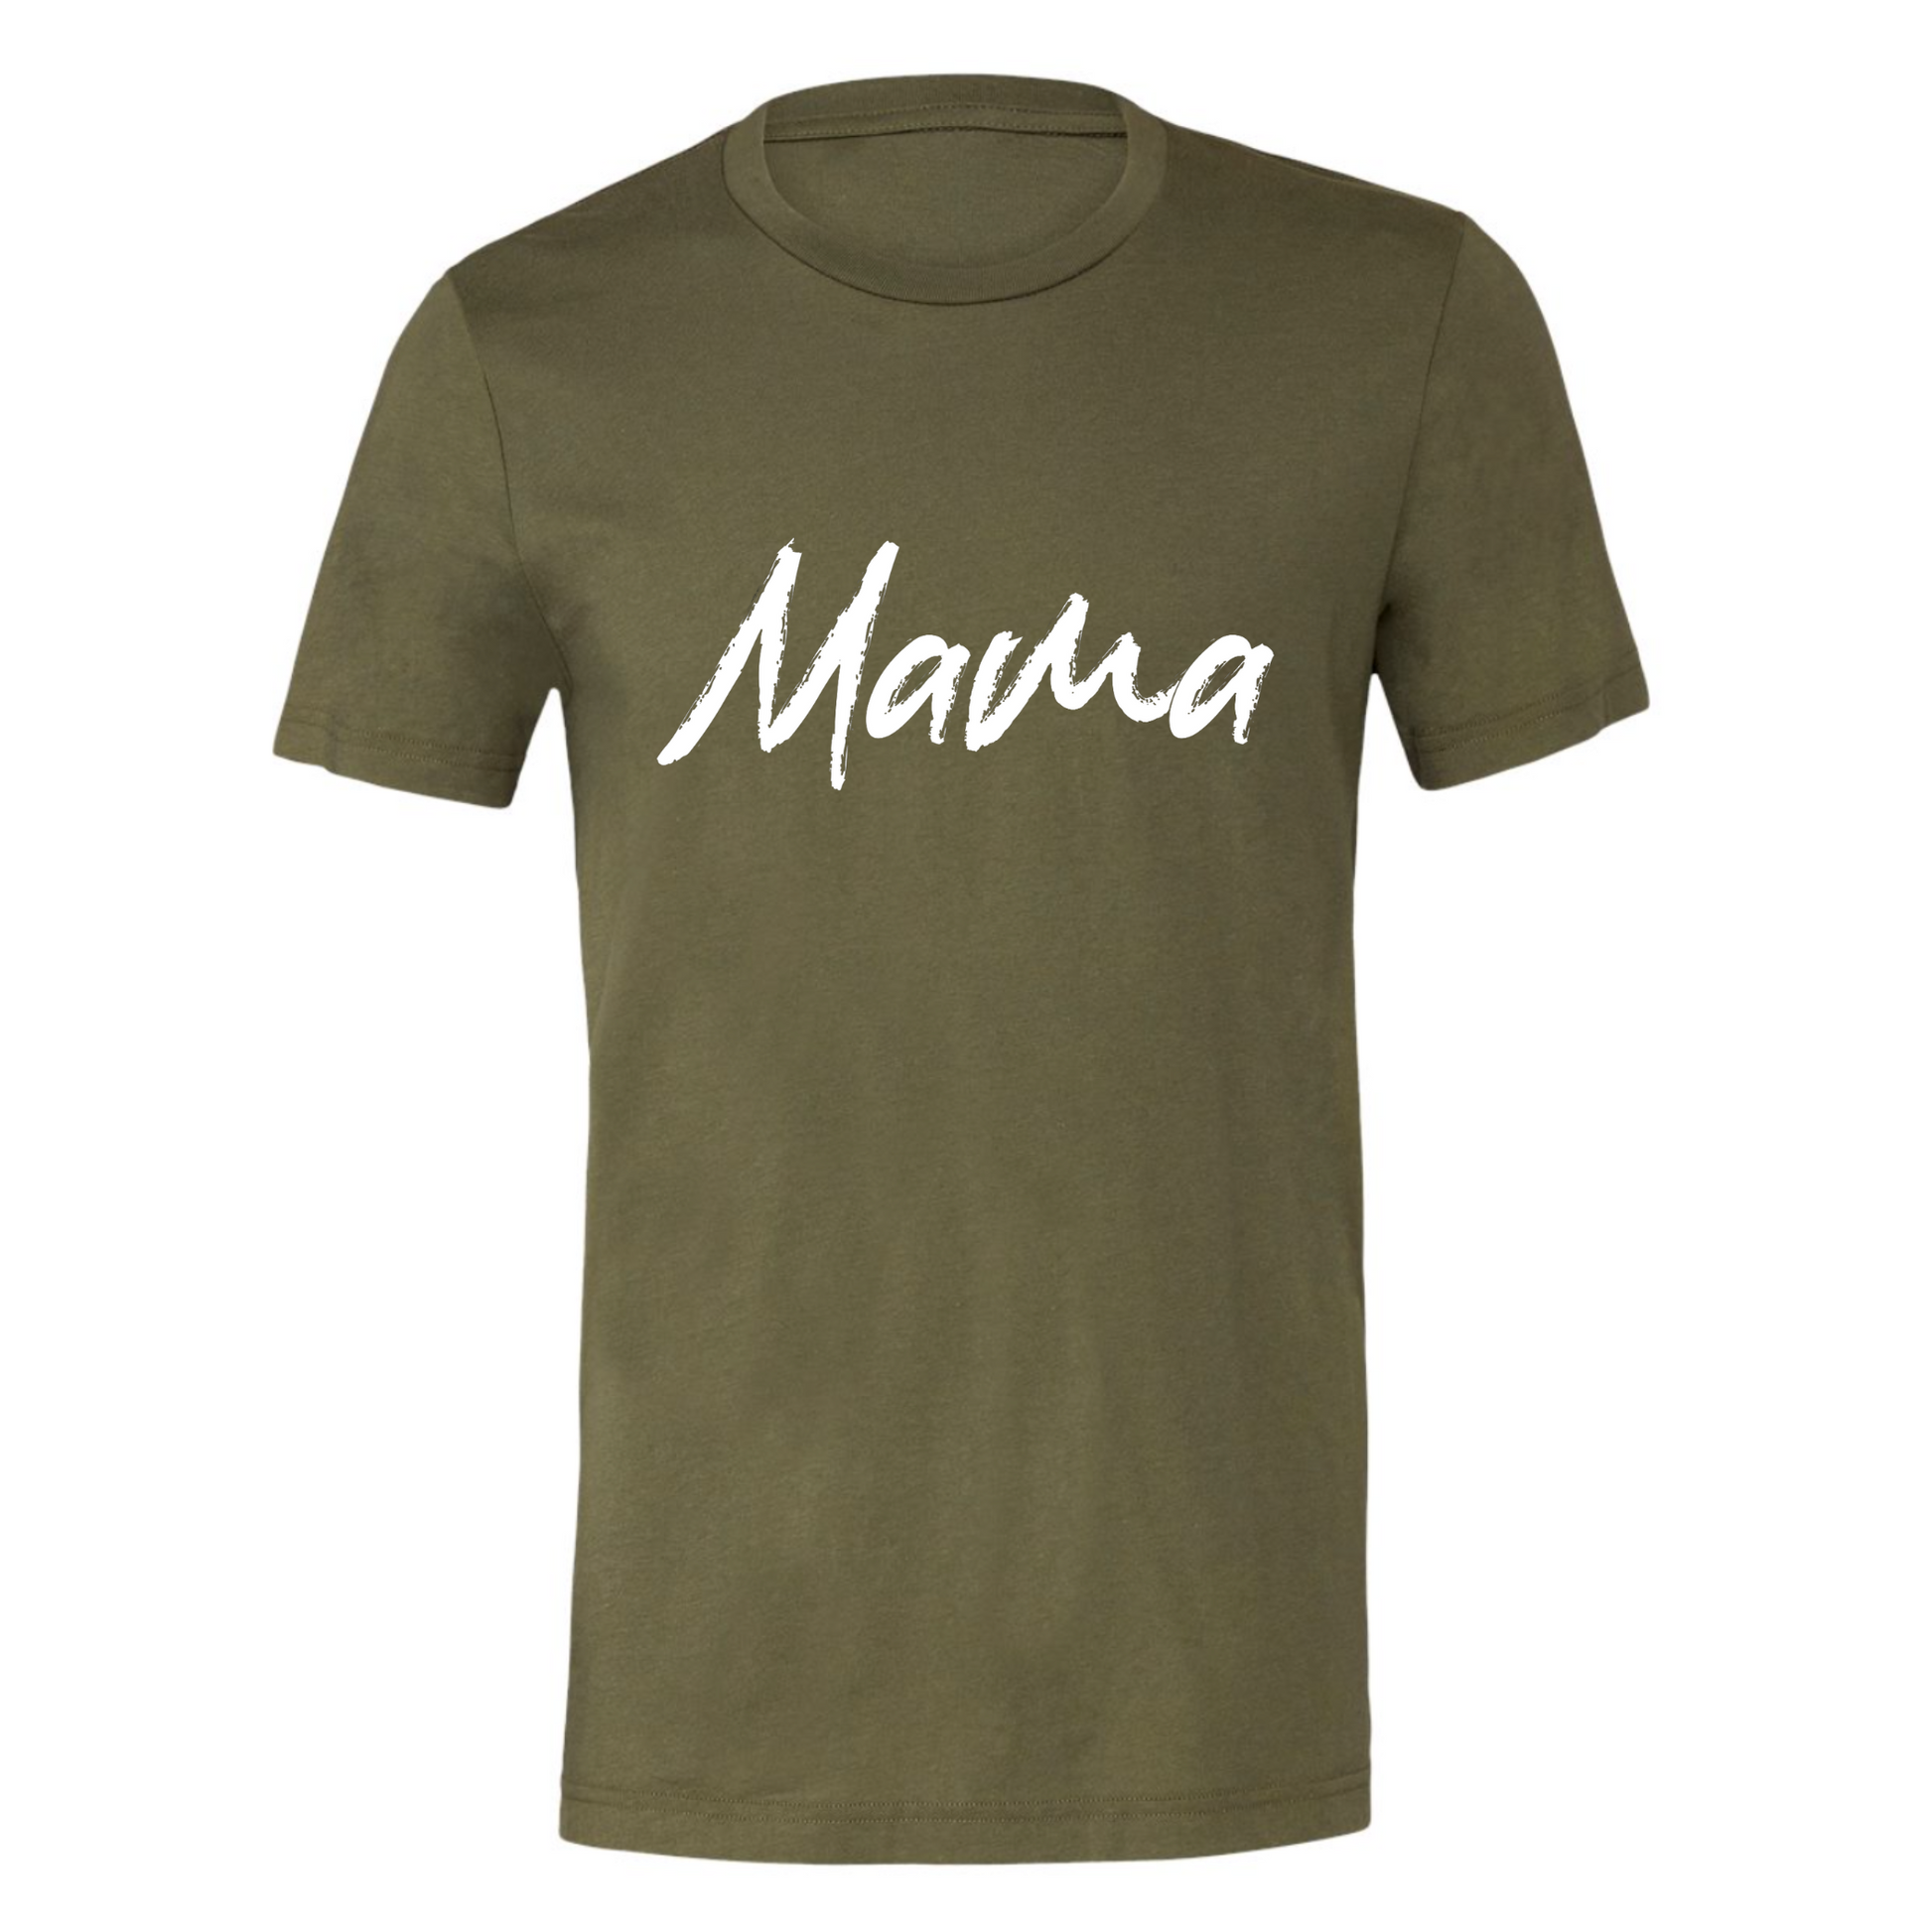 Green Mama - T-Shirt - front view